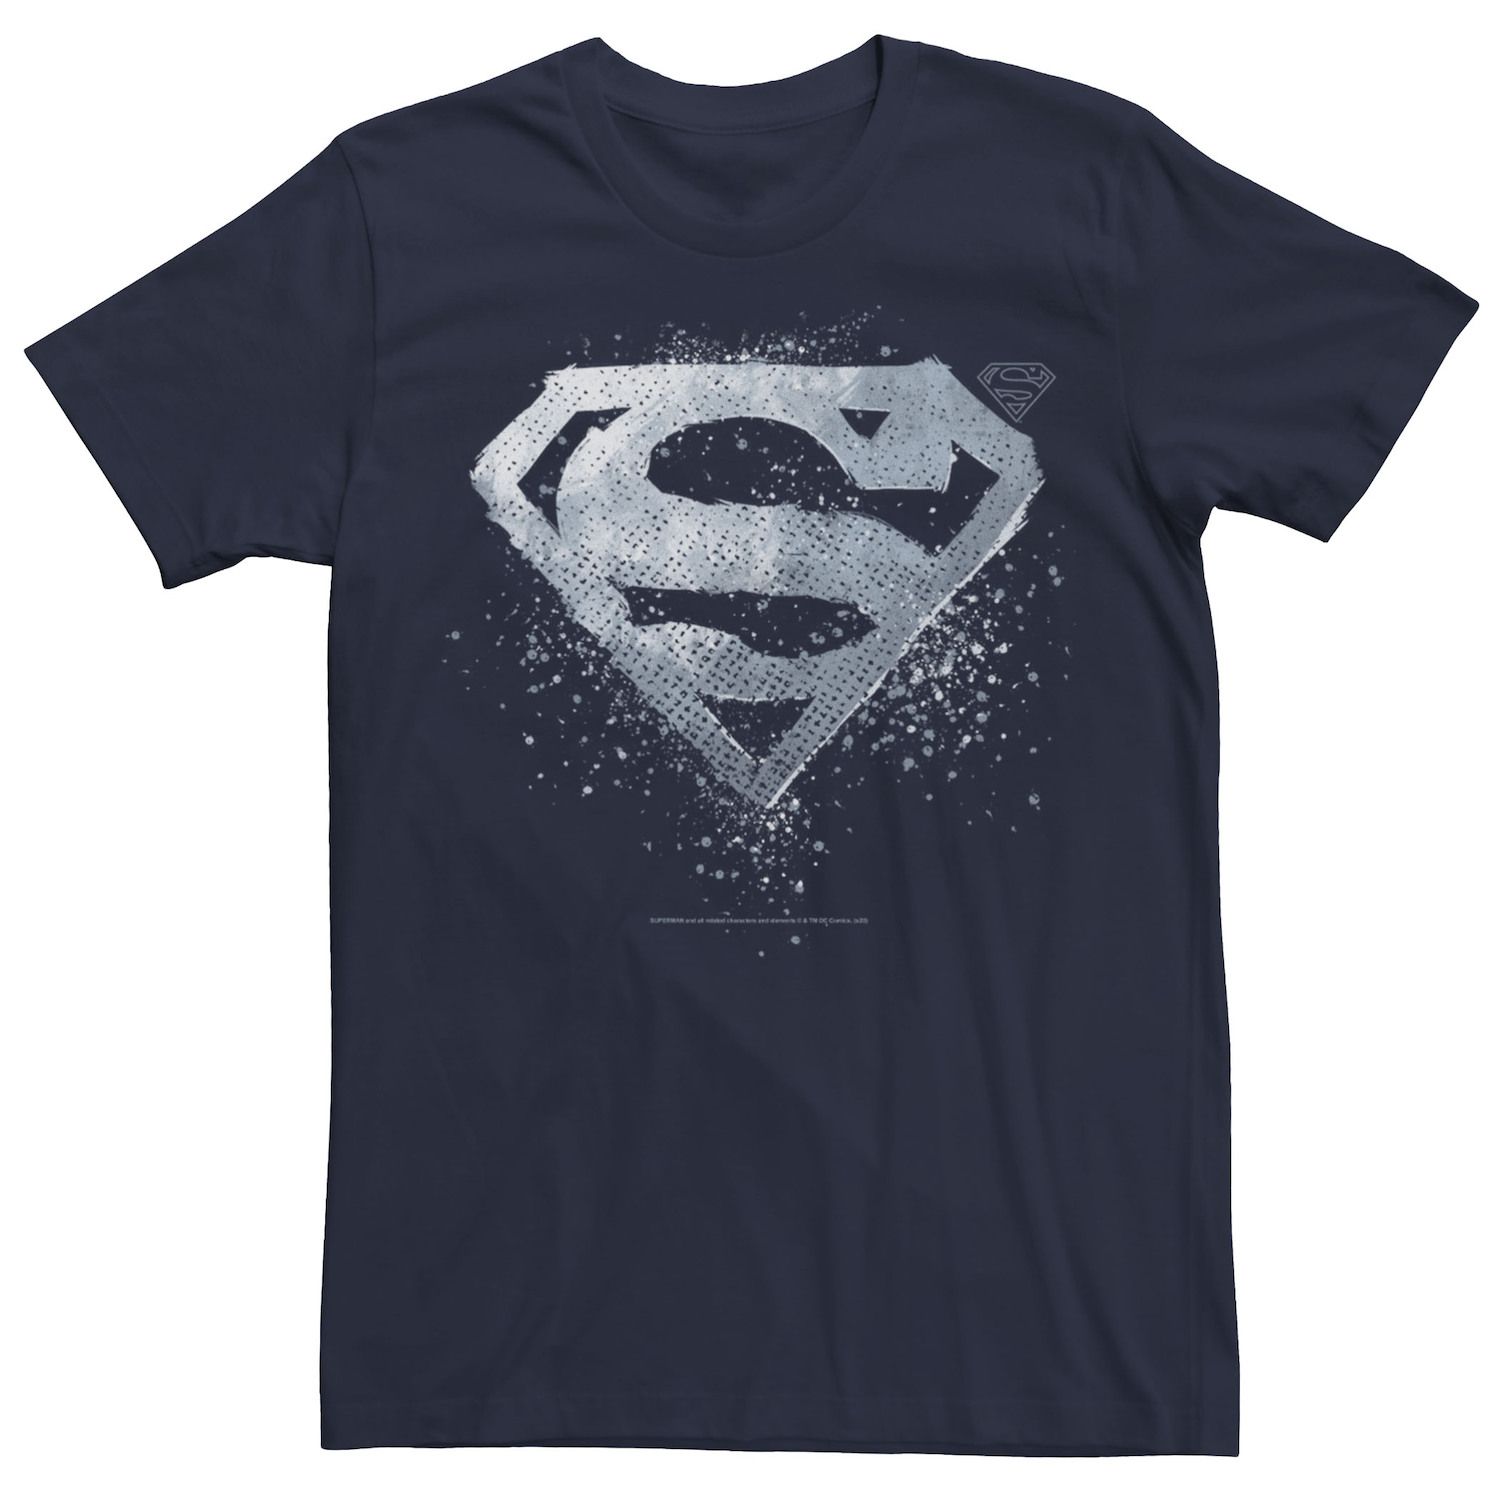 Мужская футболка с хромированным логотипом DC Fandome Superman Licensed Character